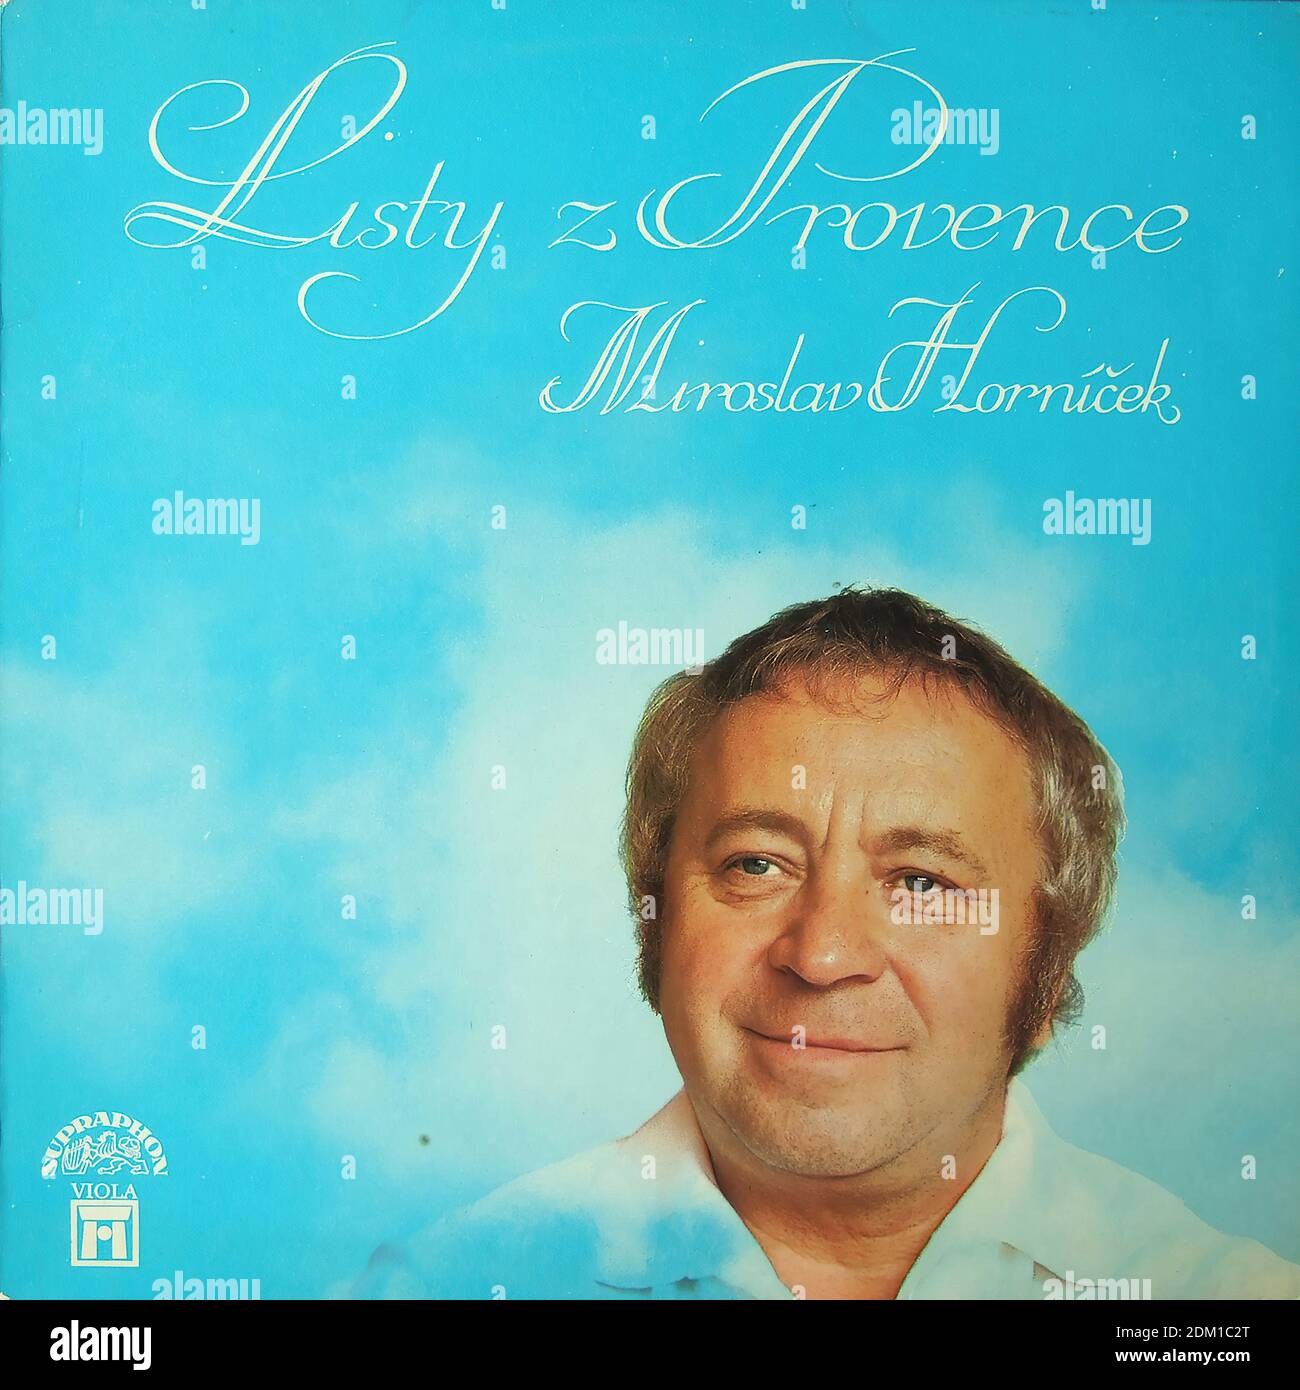 Miroslav Hornicek - Listy z Provence, Supraphon 2 18 0409, 1974 - Vintage vinyl album cover Stock Photo